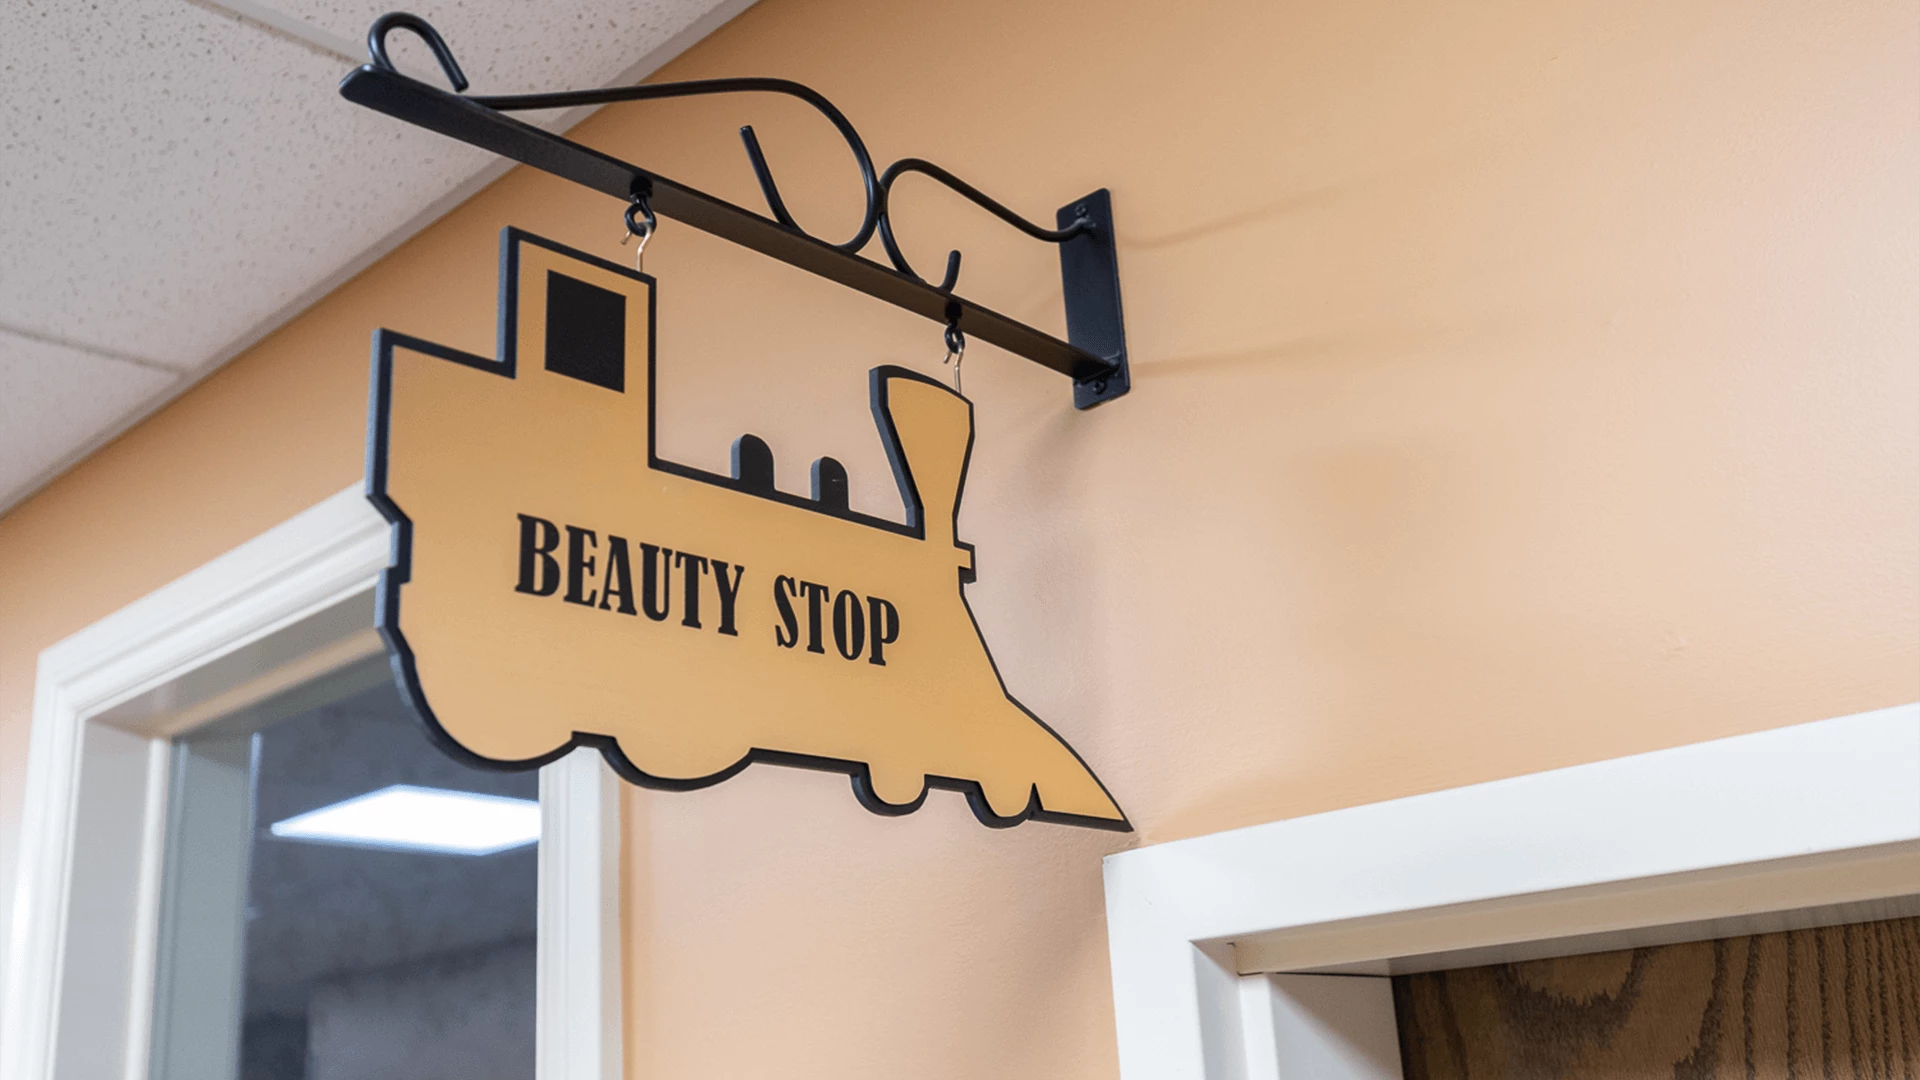 A Beauty shop on site